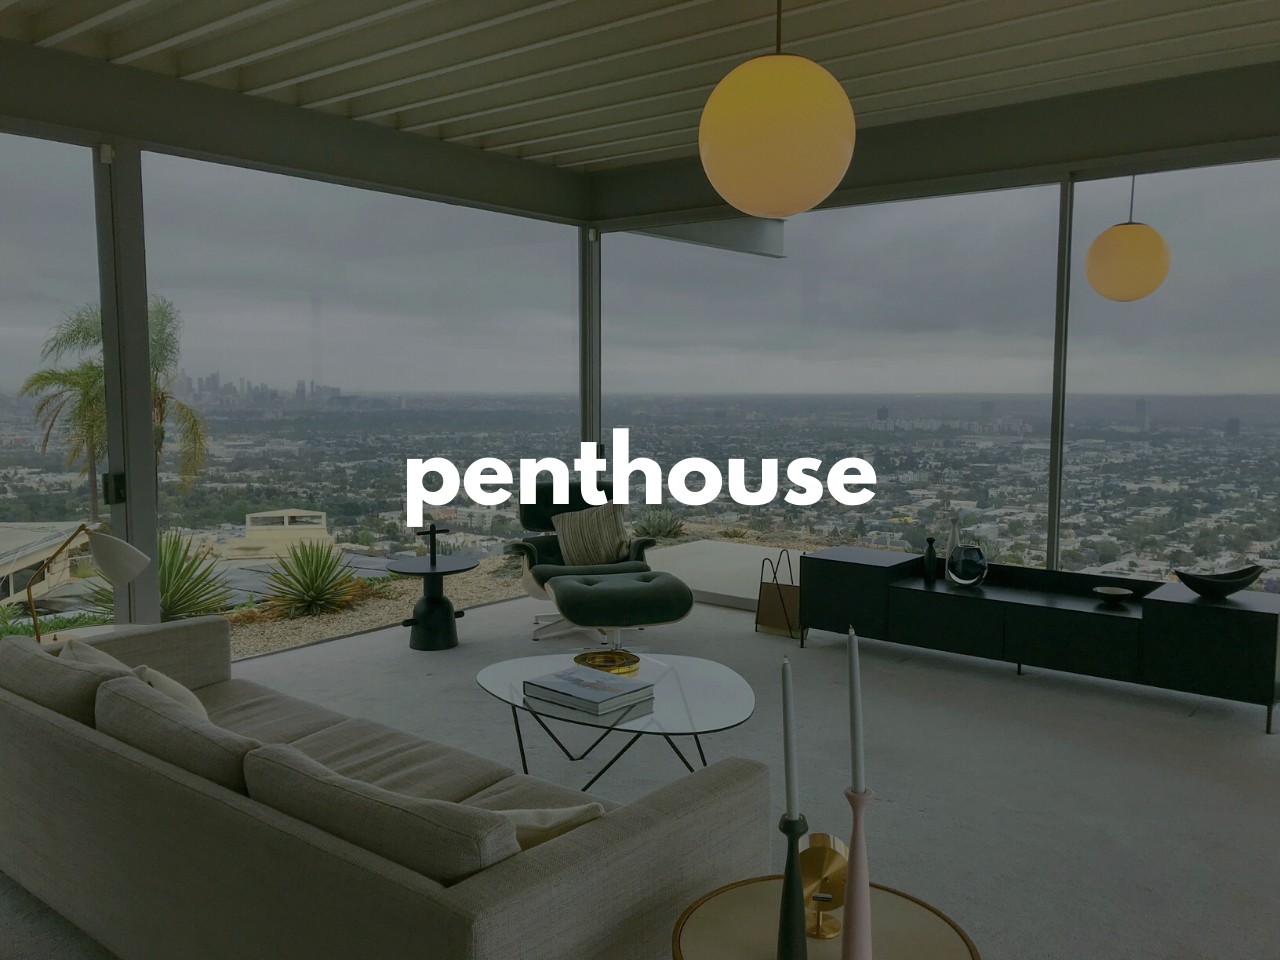 penthouse : 高層マンションにある豪華な住宅